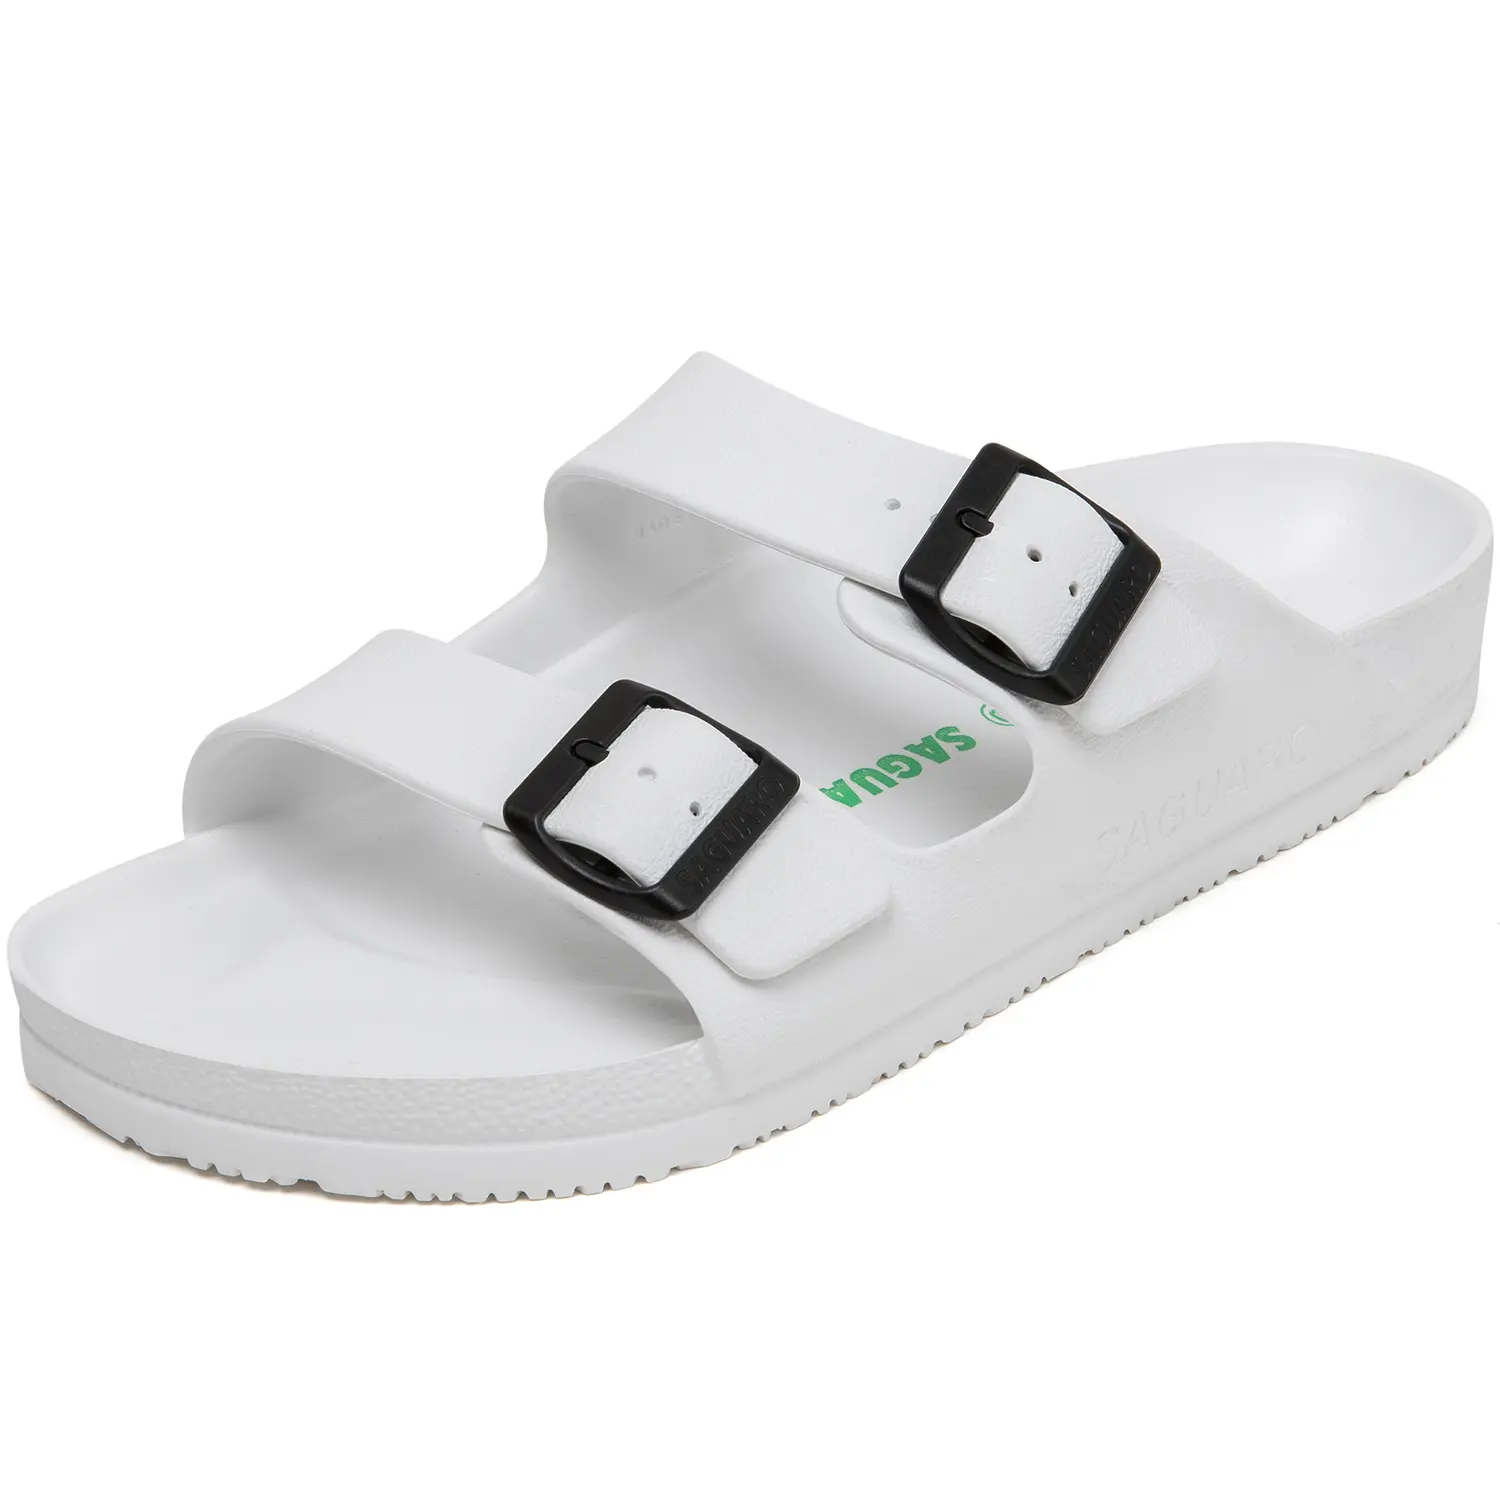 2021 Factory Price Adjustable Buckle Couple Slippers Light Comfortable EVA Sandals Non Slip Beach Shoes Slipper For Men Women